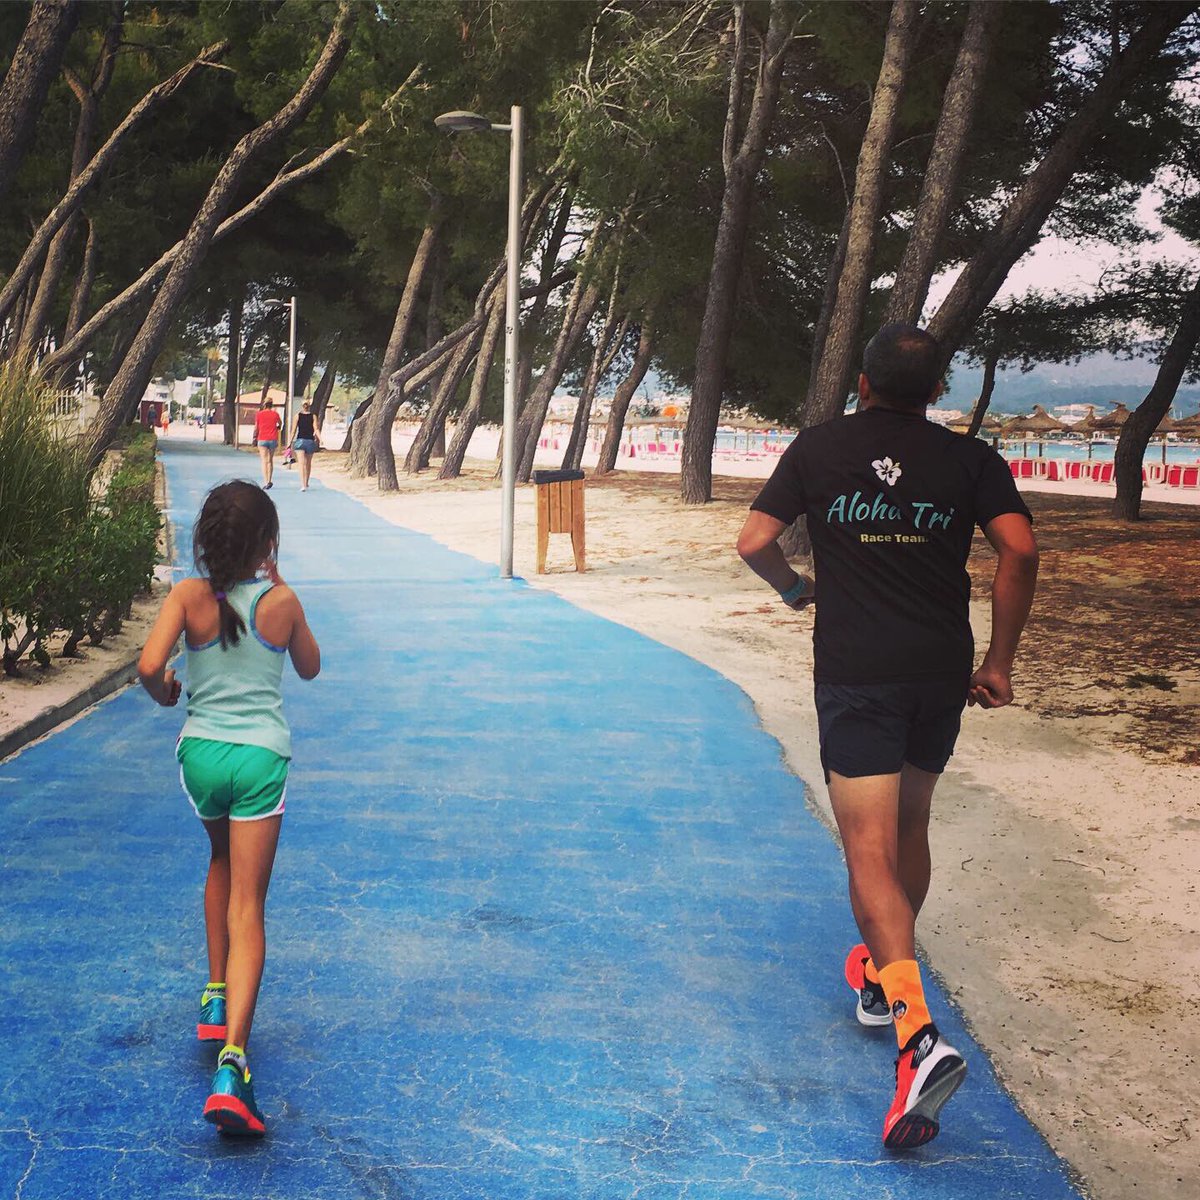 The #AlohaTri family acclimatising with a run ahead of #ironmanmallorca on Saturday..

#ironmancoach #triathlon #IM703mallorca #uktrichat